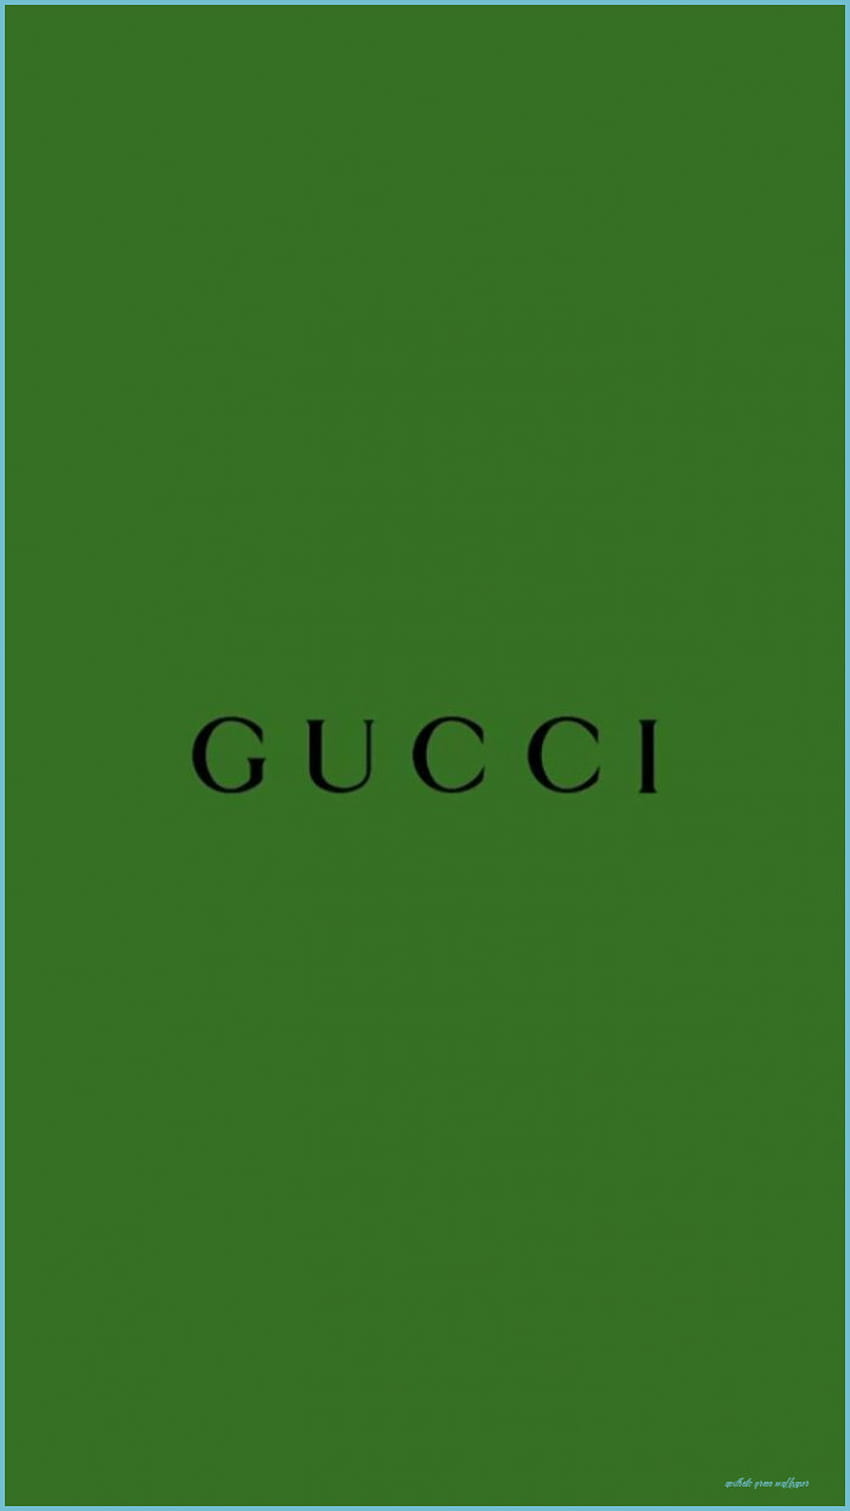 Gucci logo wallpaper - Light green